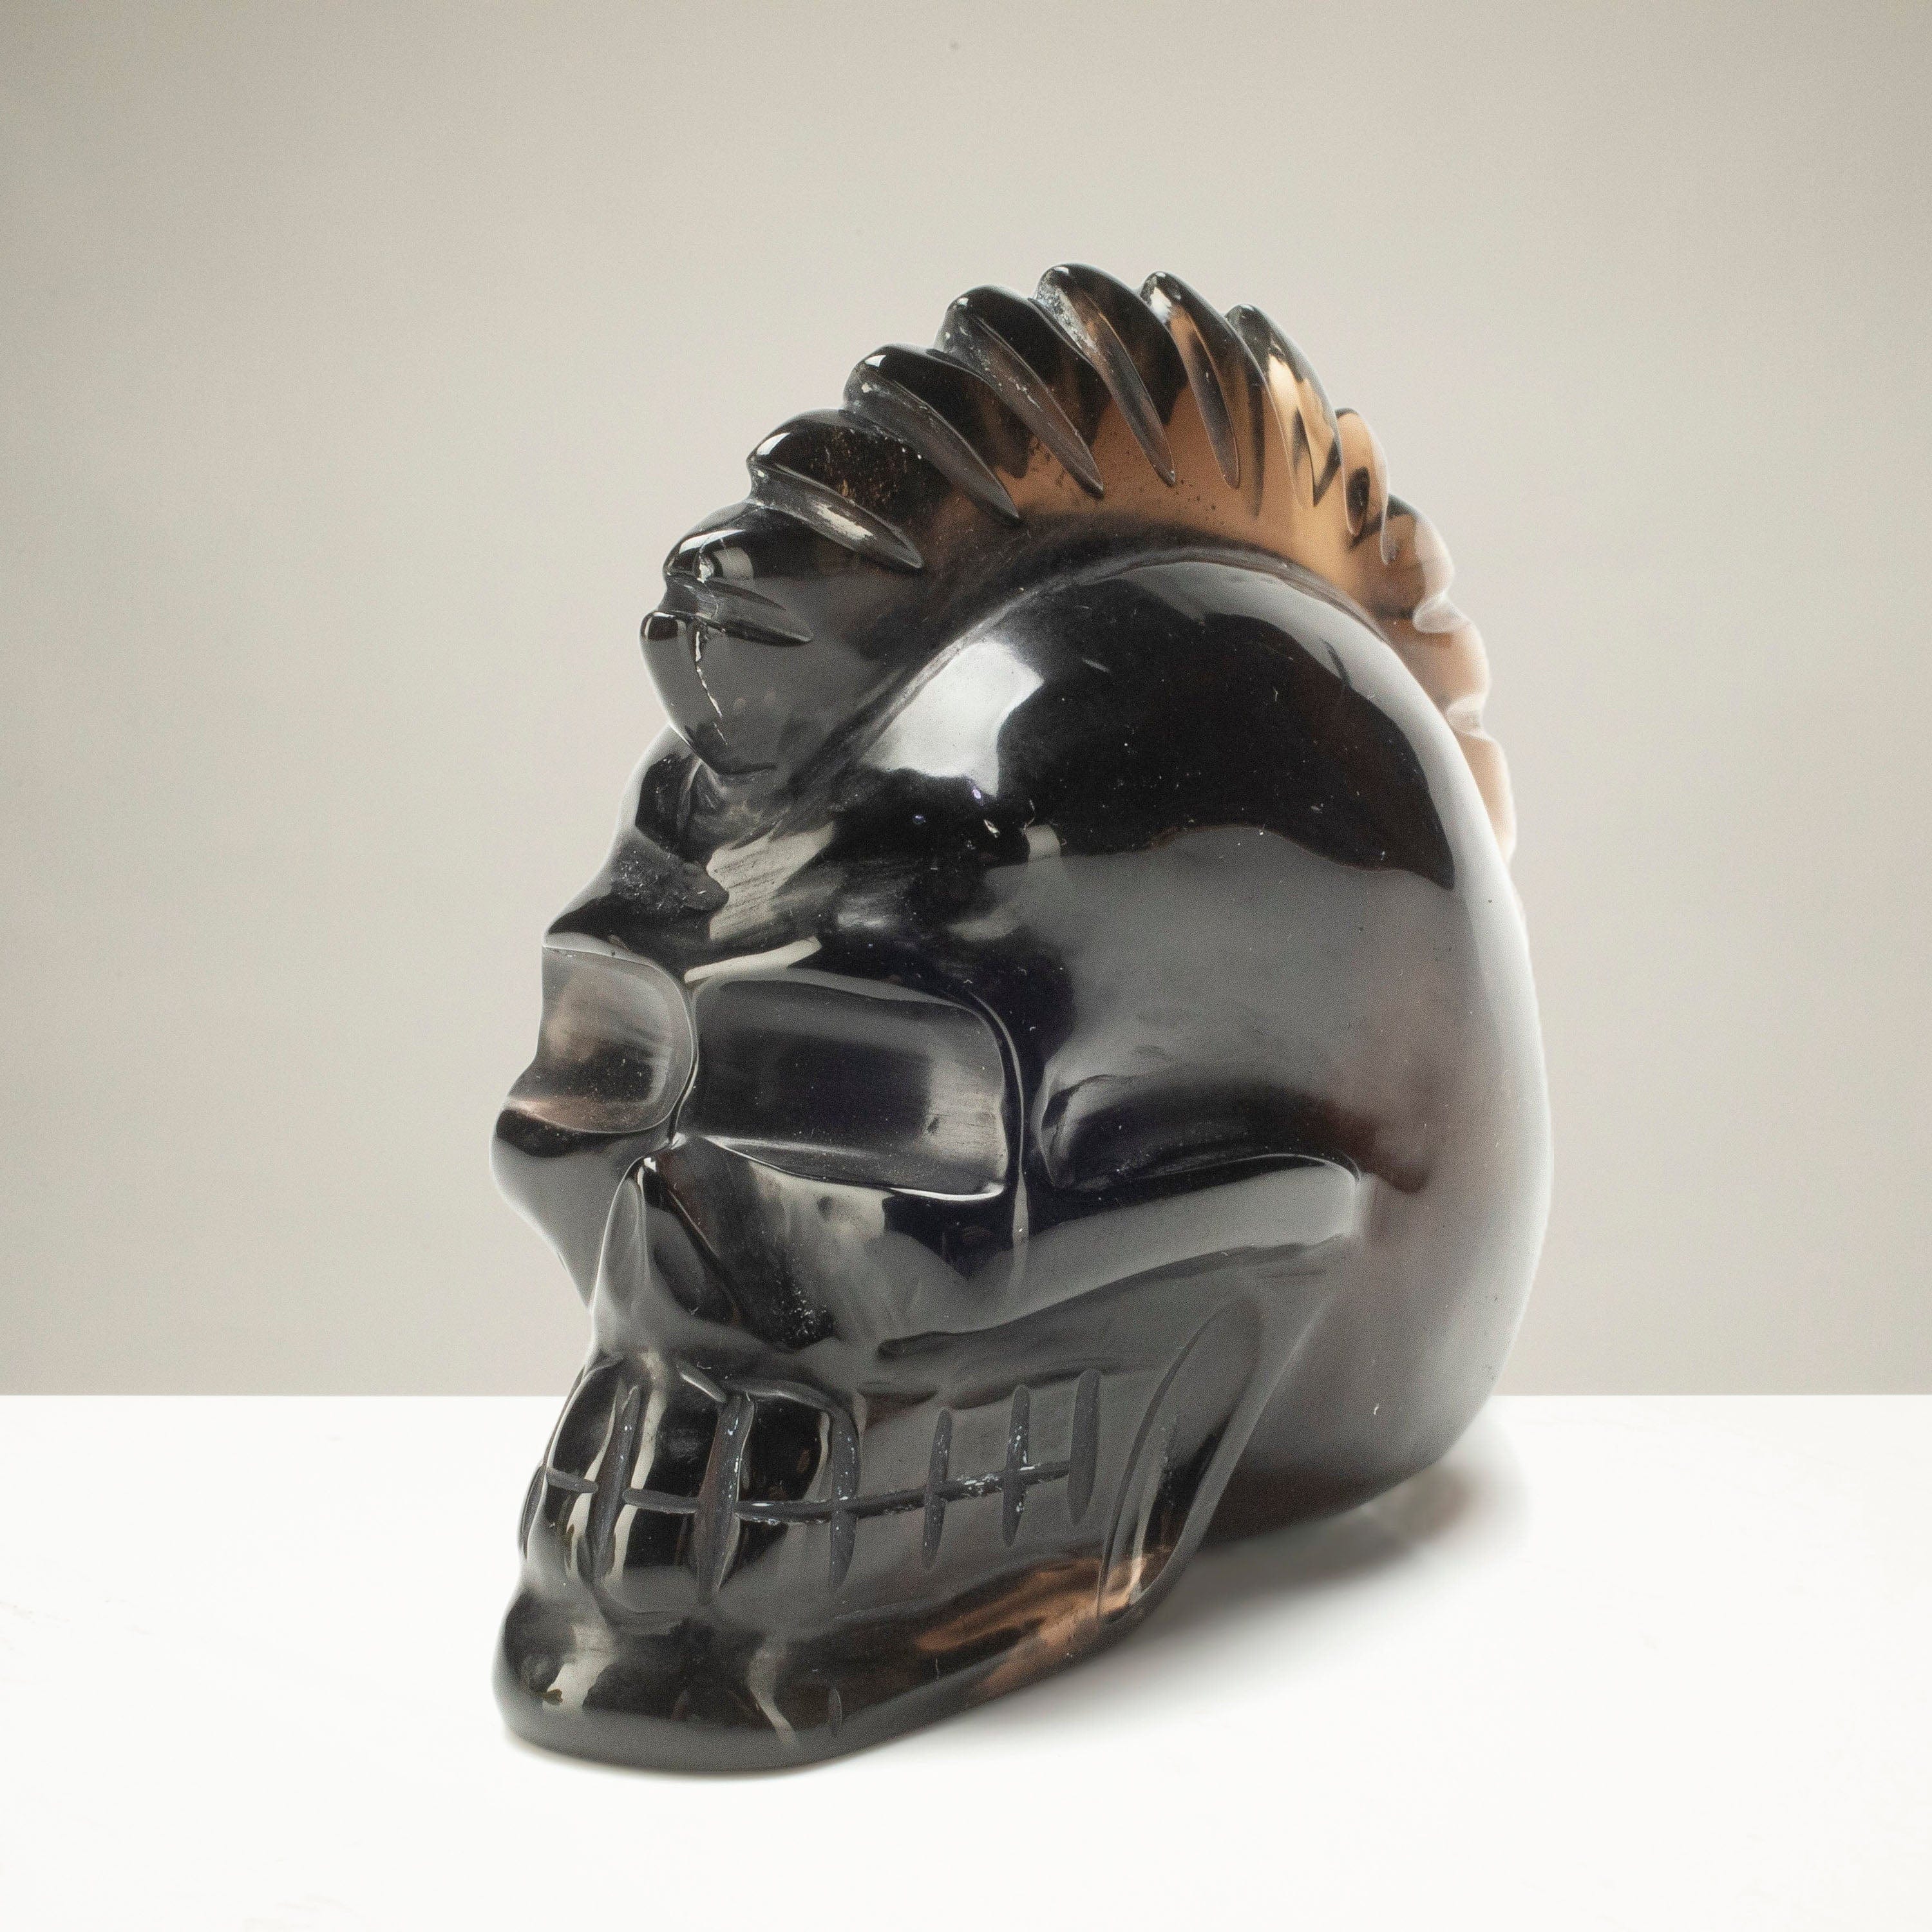 KALIFANO Smoky Quartz Smoky Quartz Skull Carving from Brazil - 3" / 300 grams SK1440.002